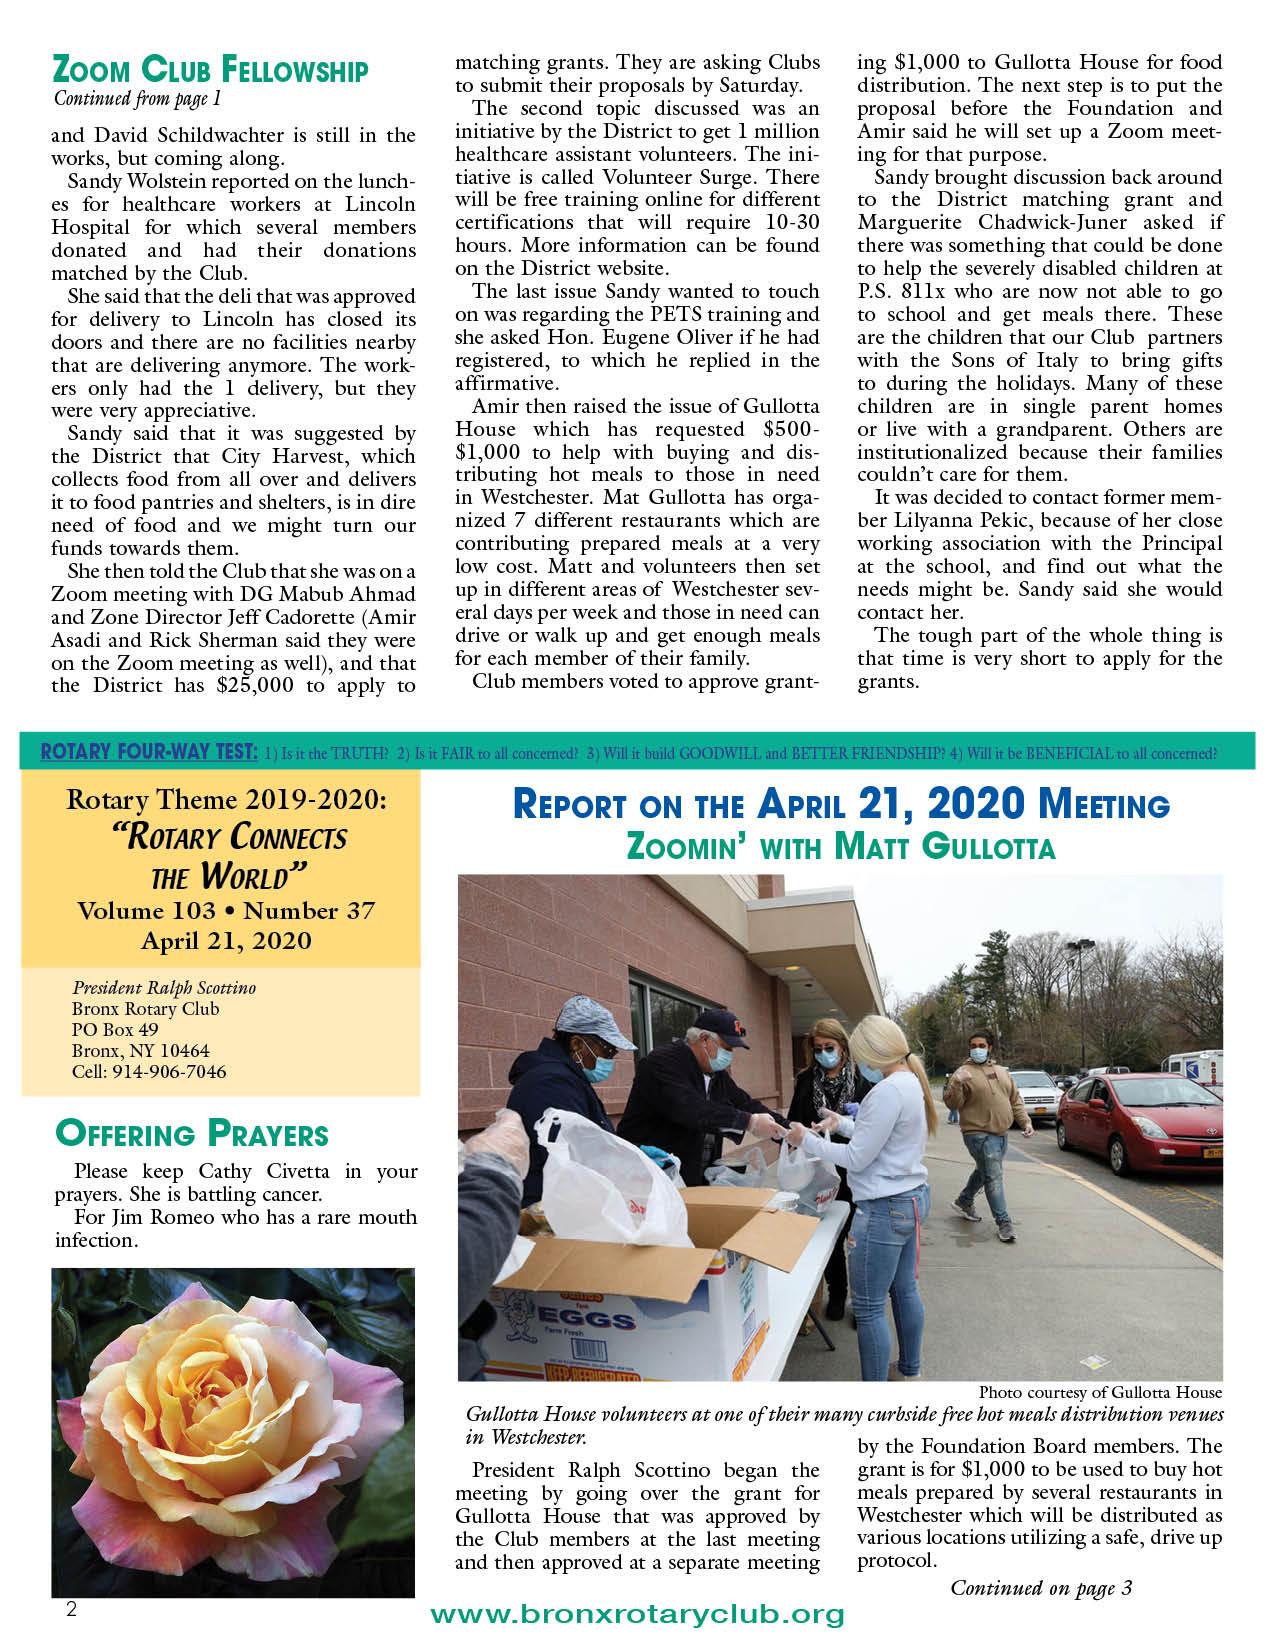 Tuesdays newsletter 4/14, 4/21 & 4/28/2020 p2